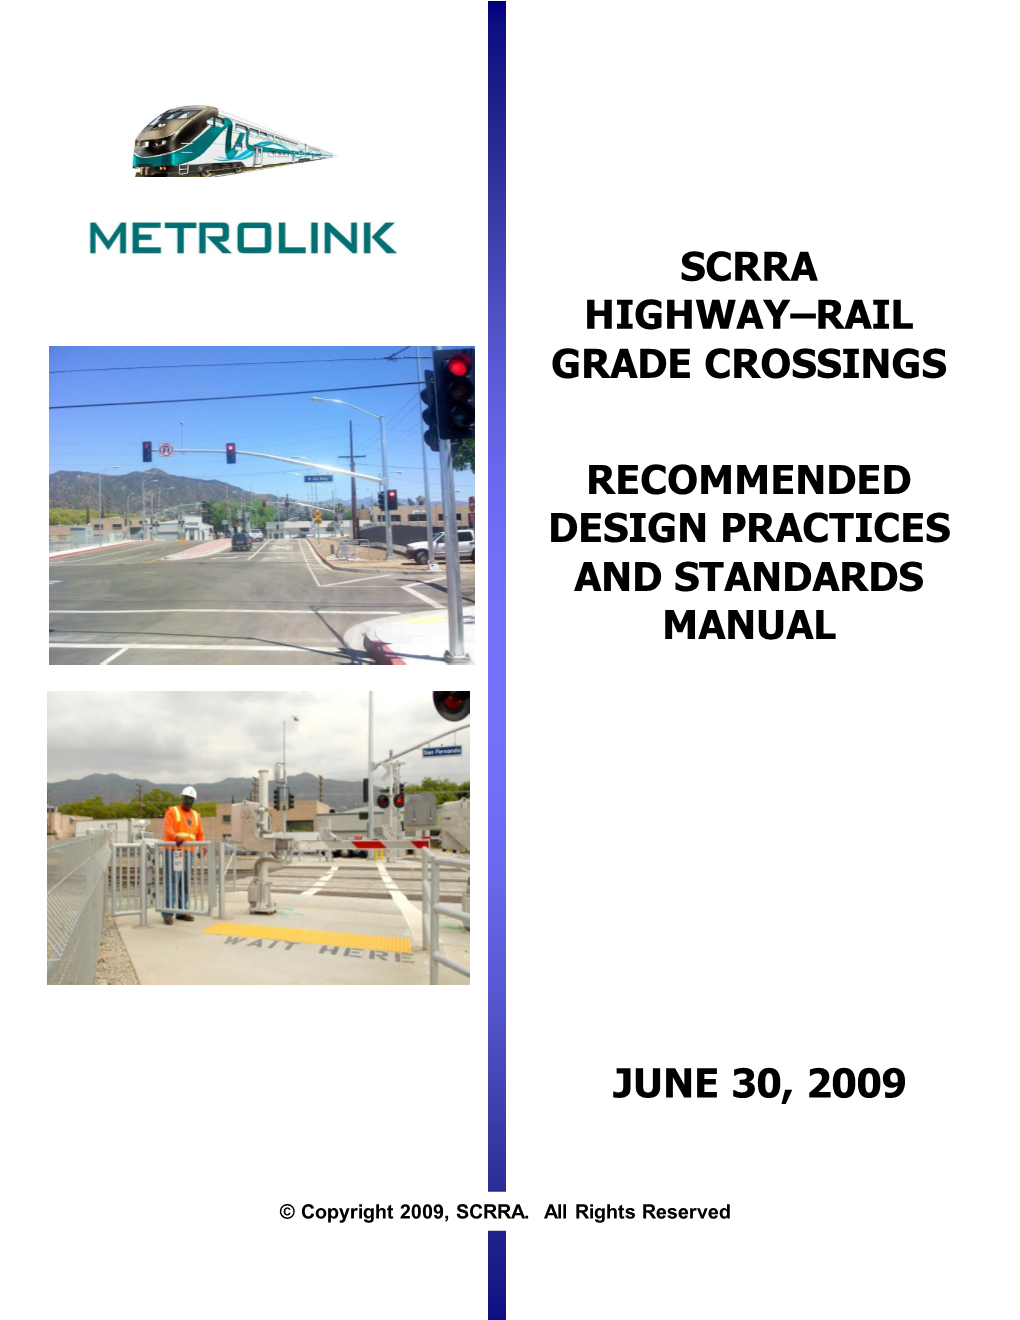 Scrra Highway–Rail Grade Crossings Recommended